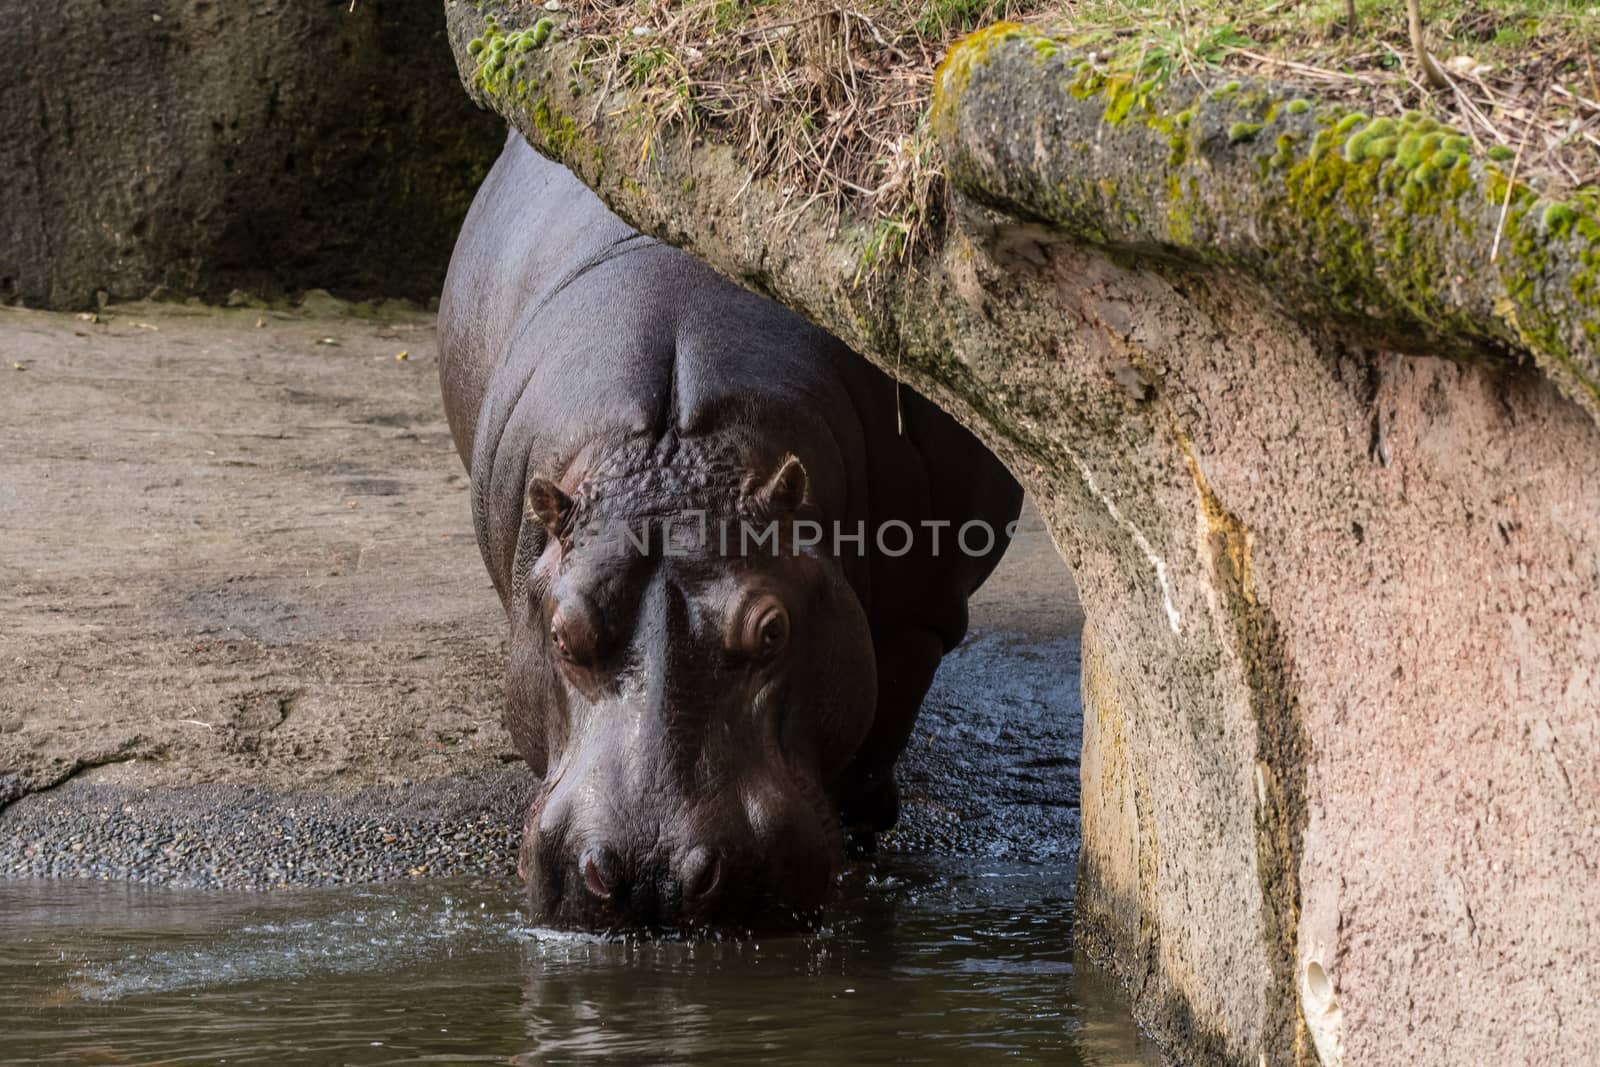 Hippo in artificial habitat at zoo in Seattle, WA